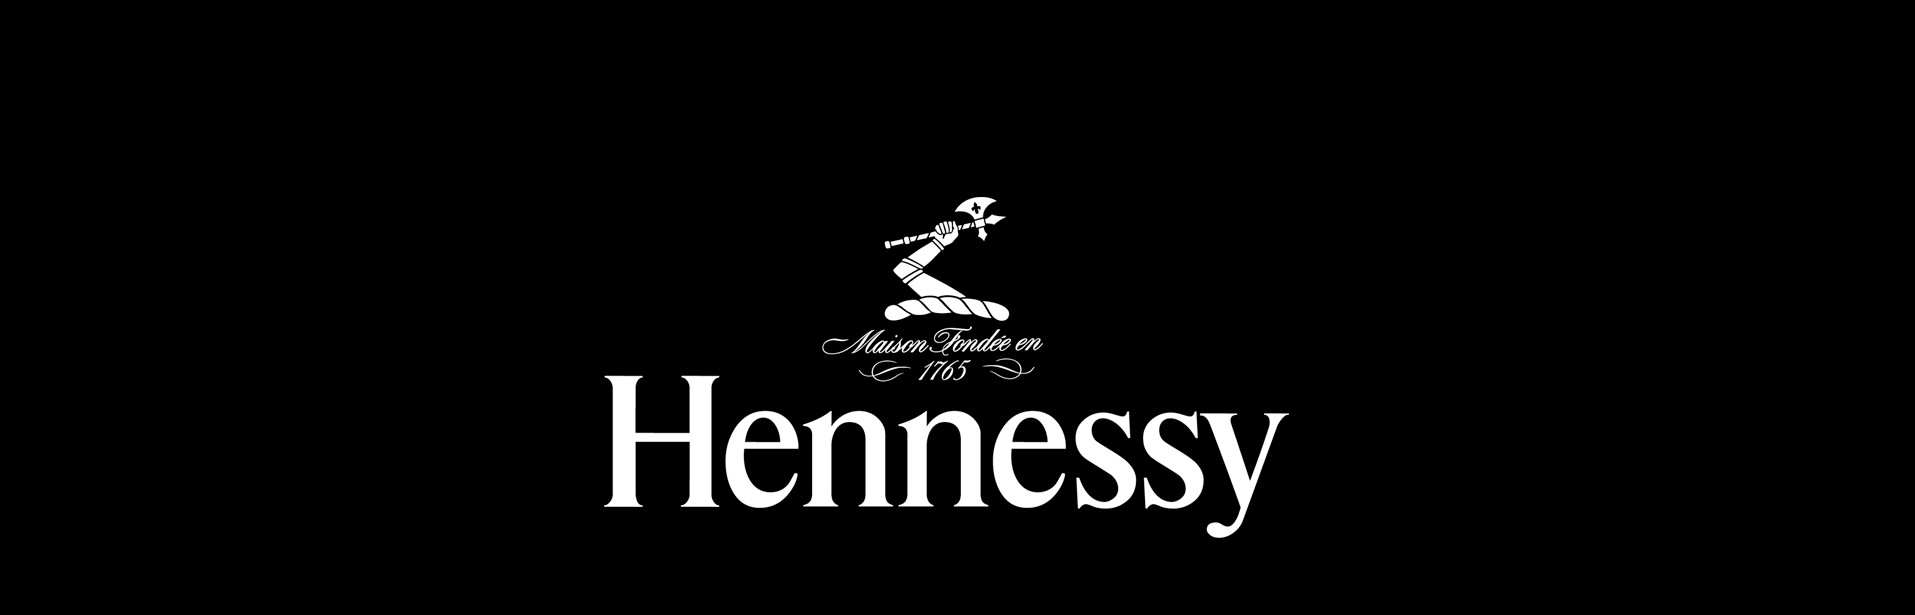 Hennessy - Prike